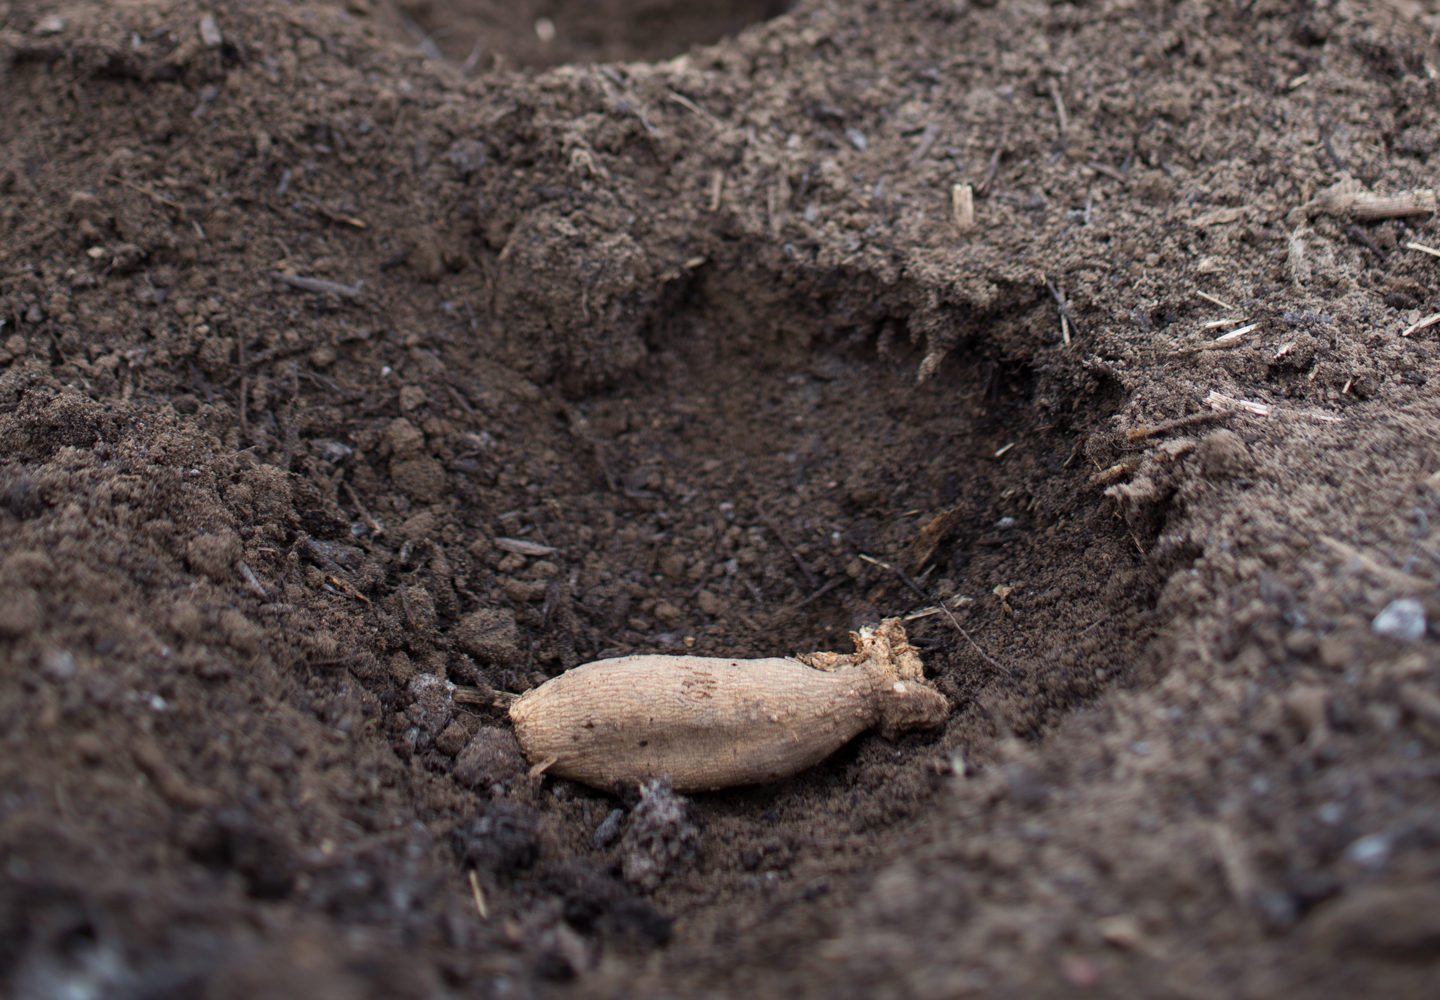 A dahlia tuber in the soil